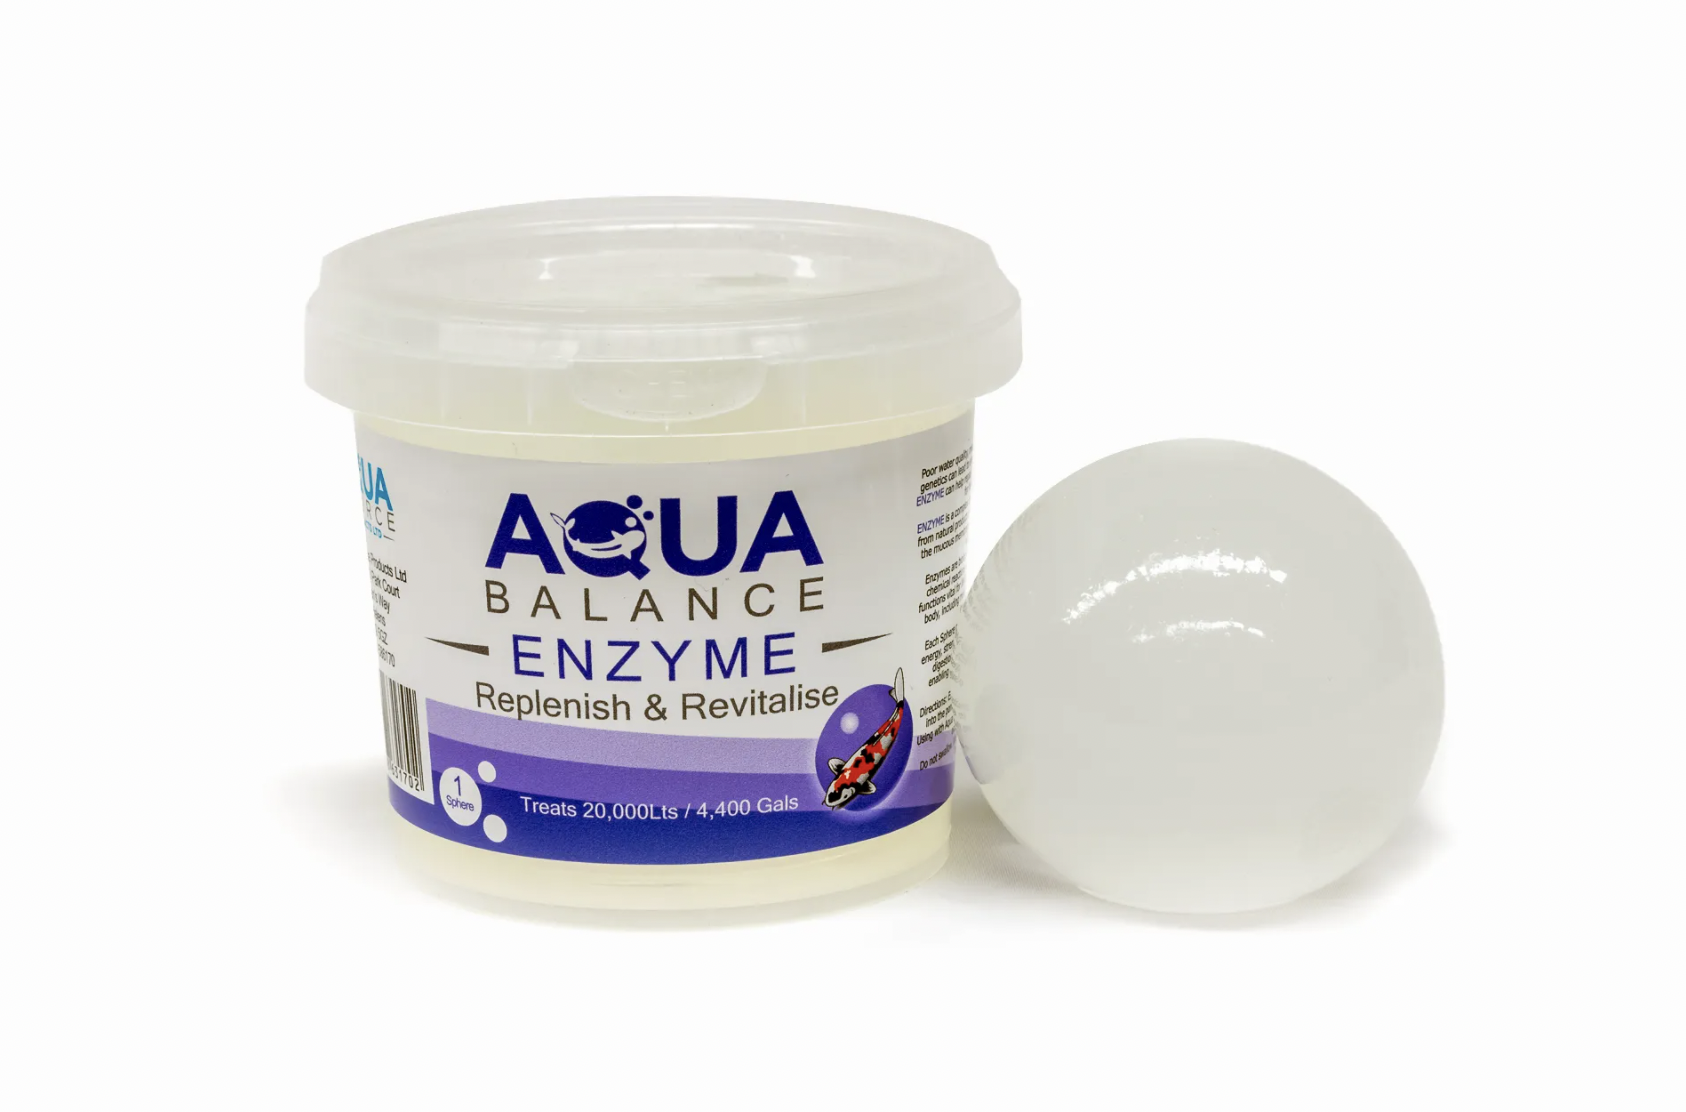 Aqua Balance Enzyme Sphere (20,000 ltrs)